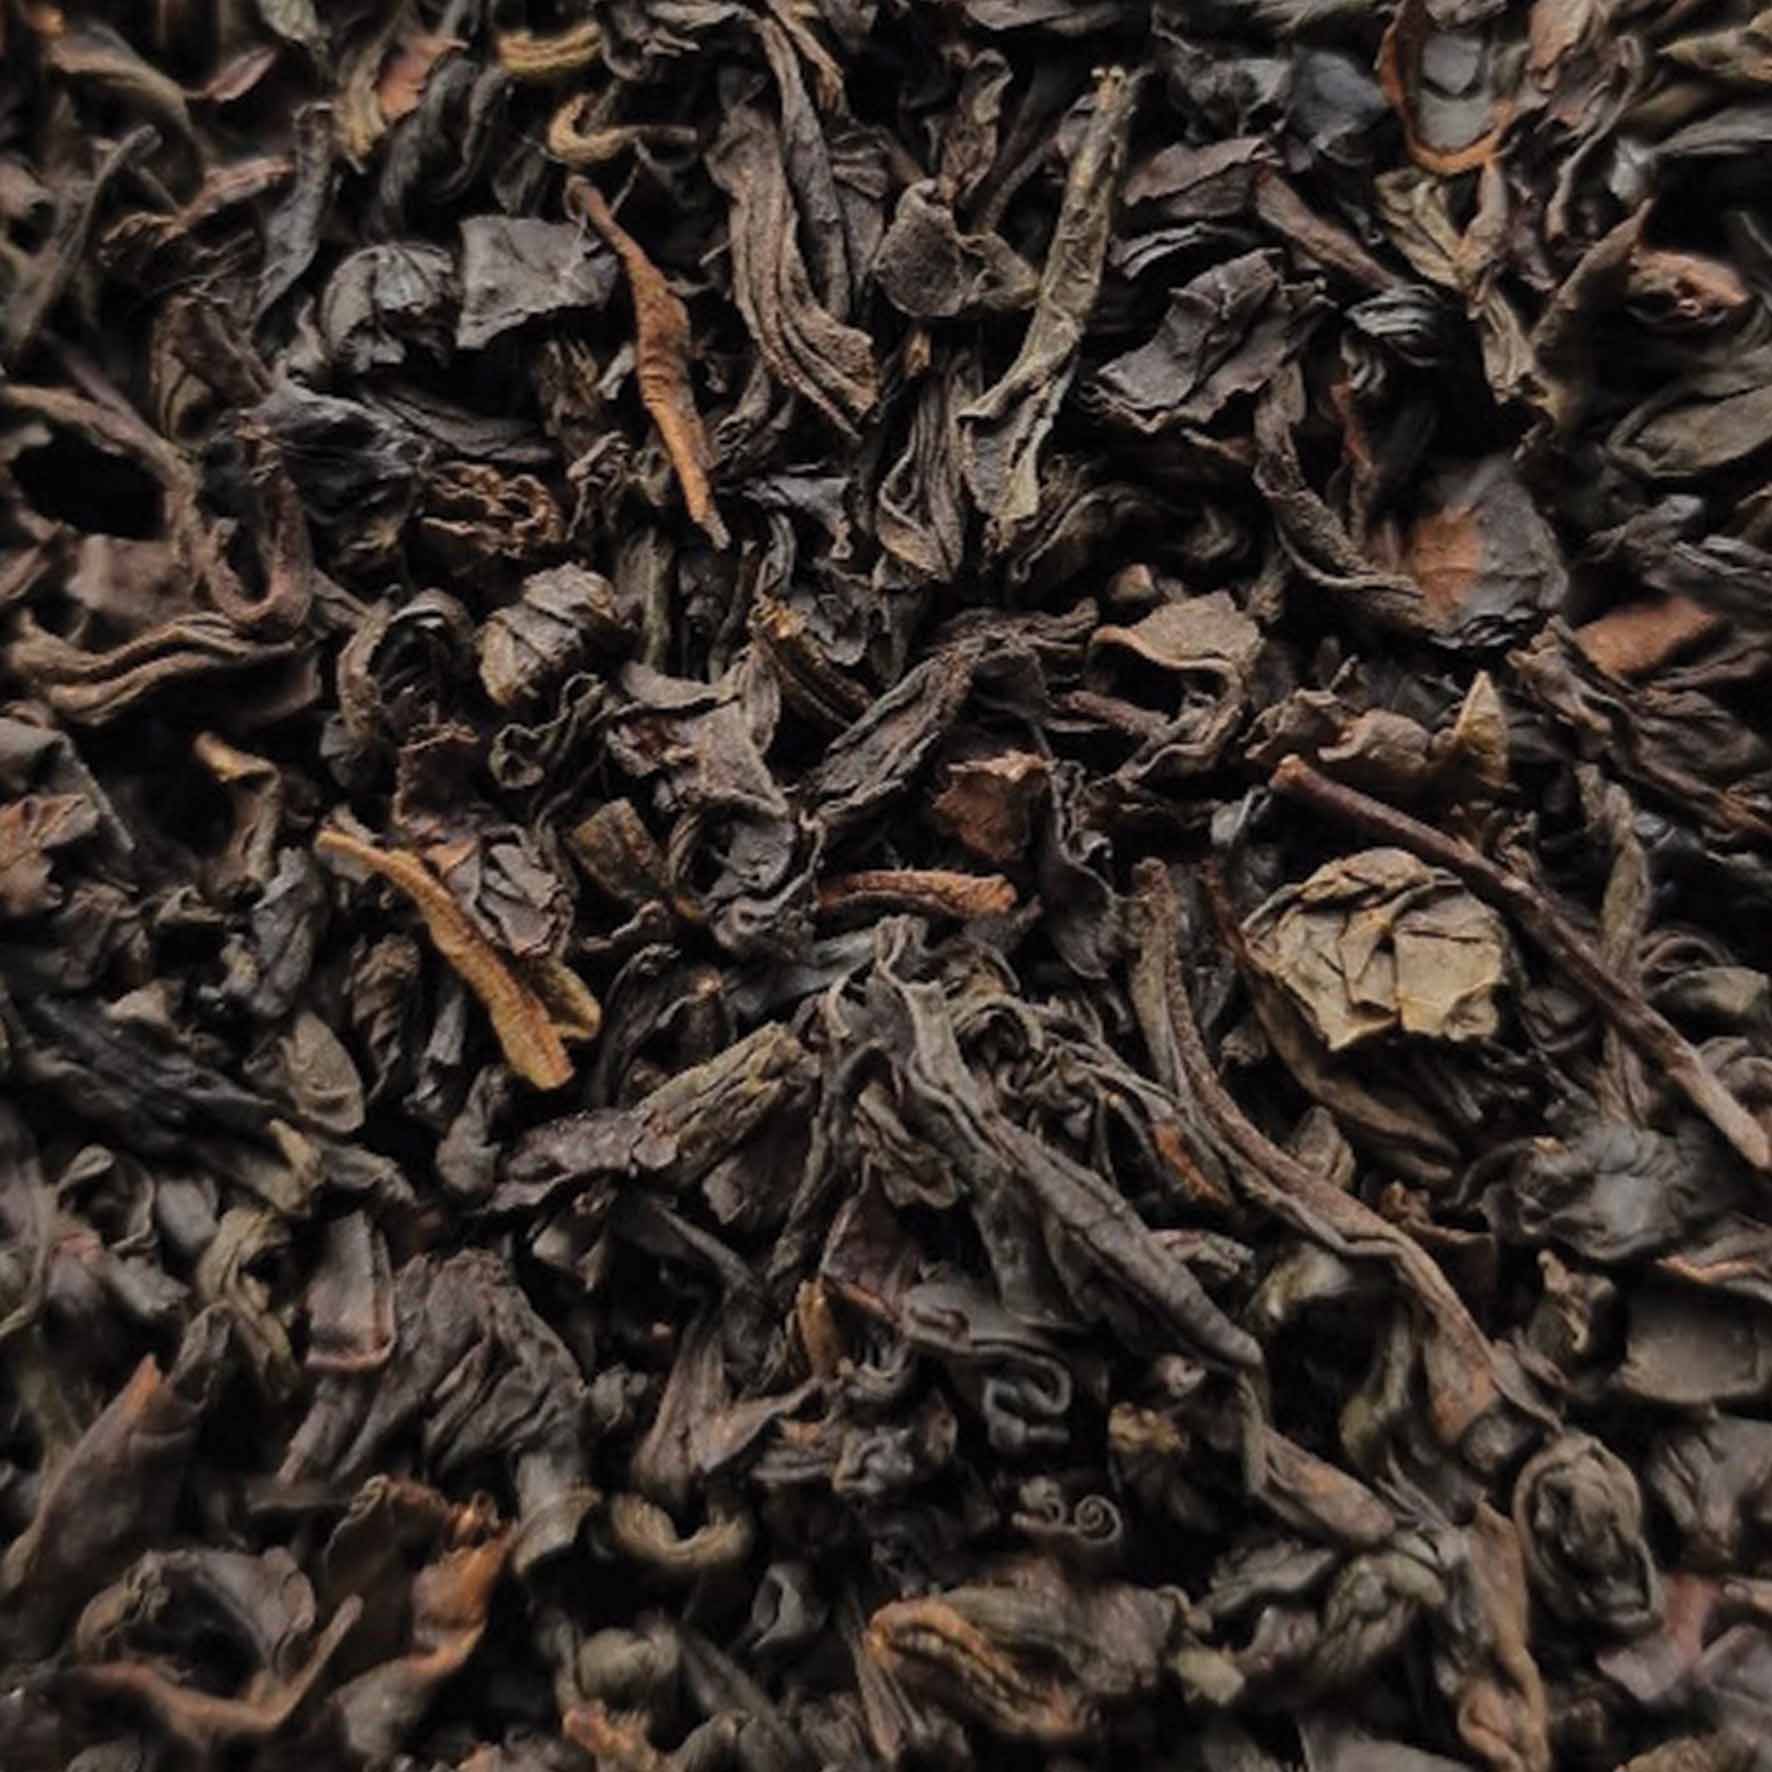 Lapsang Souchong Black Loose Leaf Tea - one pouch